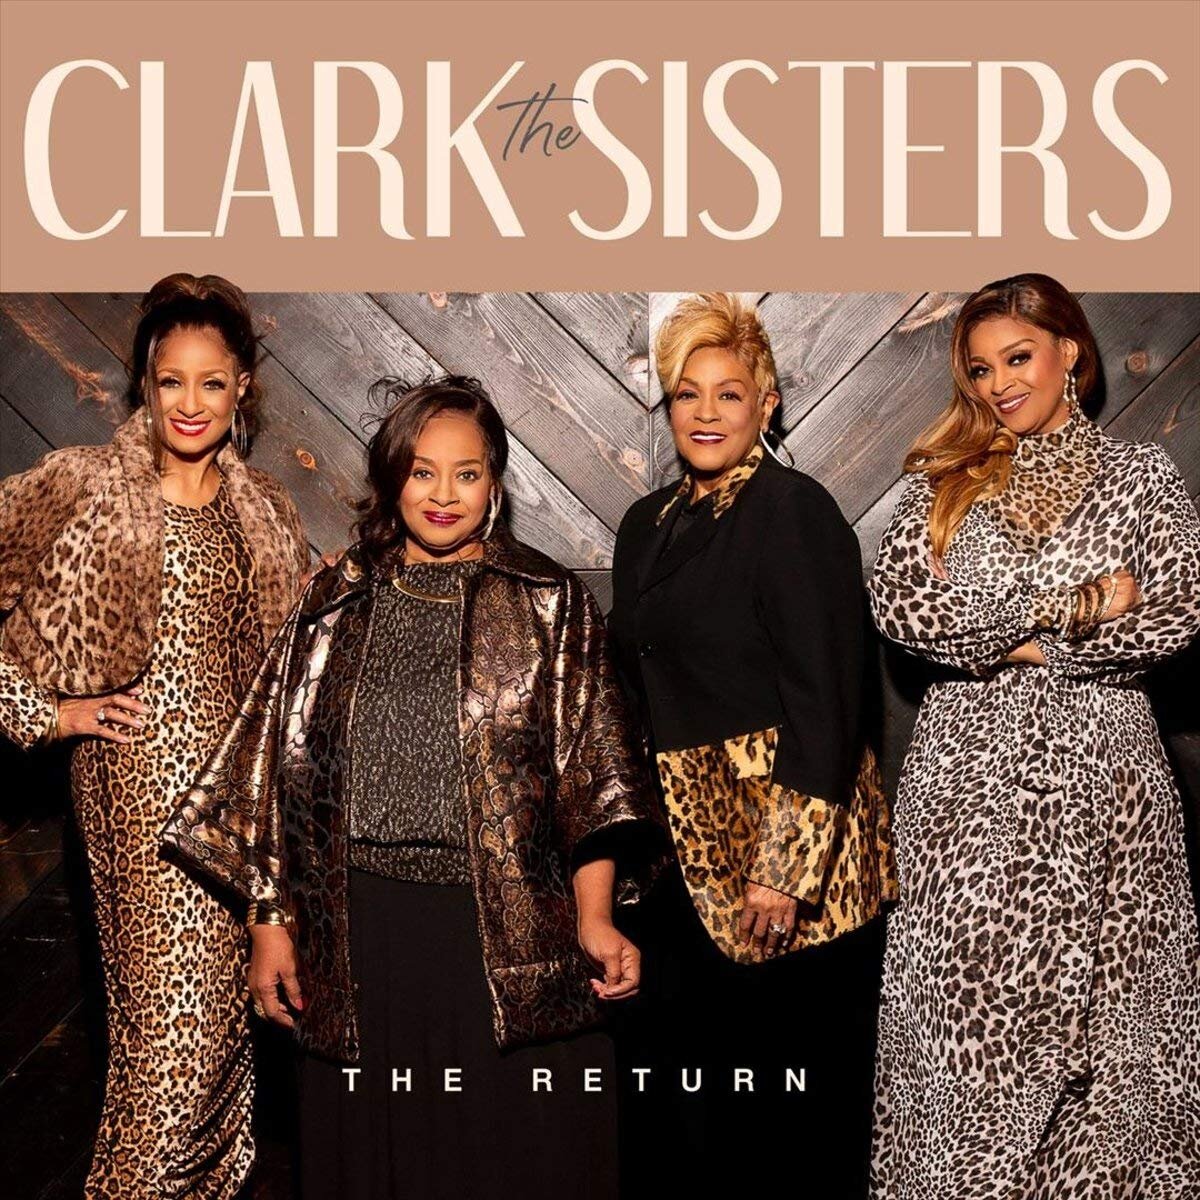 The Return - The Clark Sisters (2020)